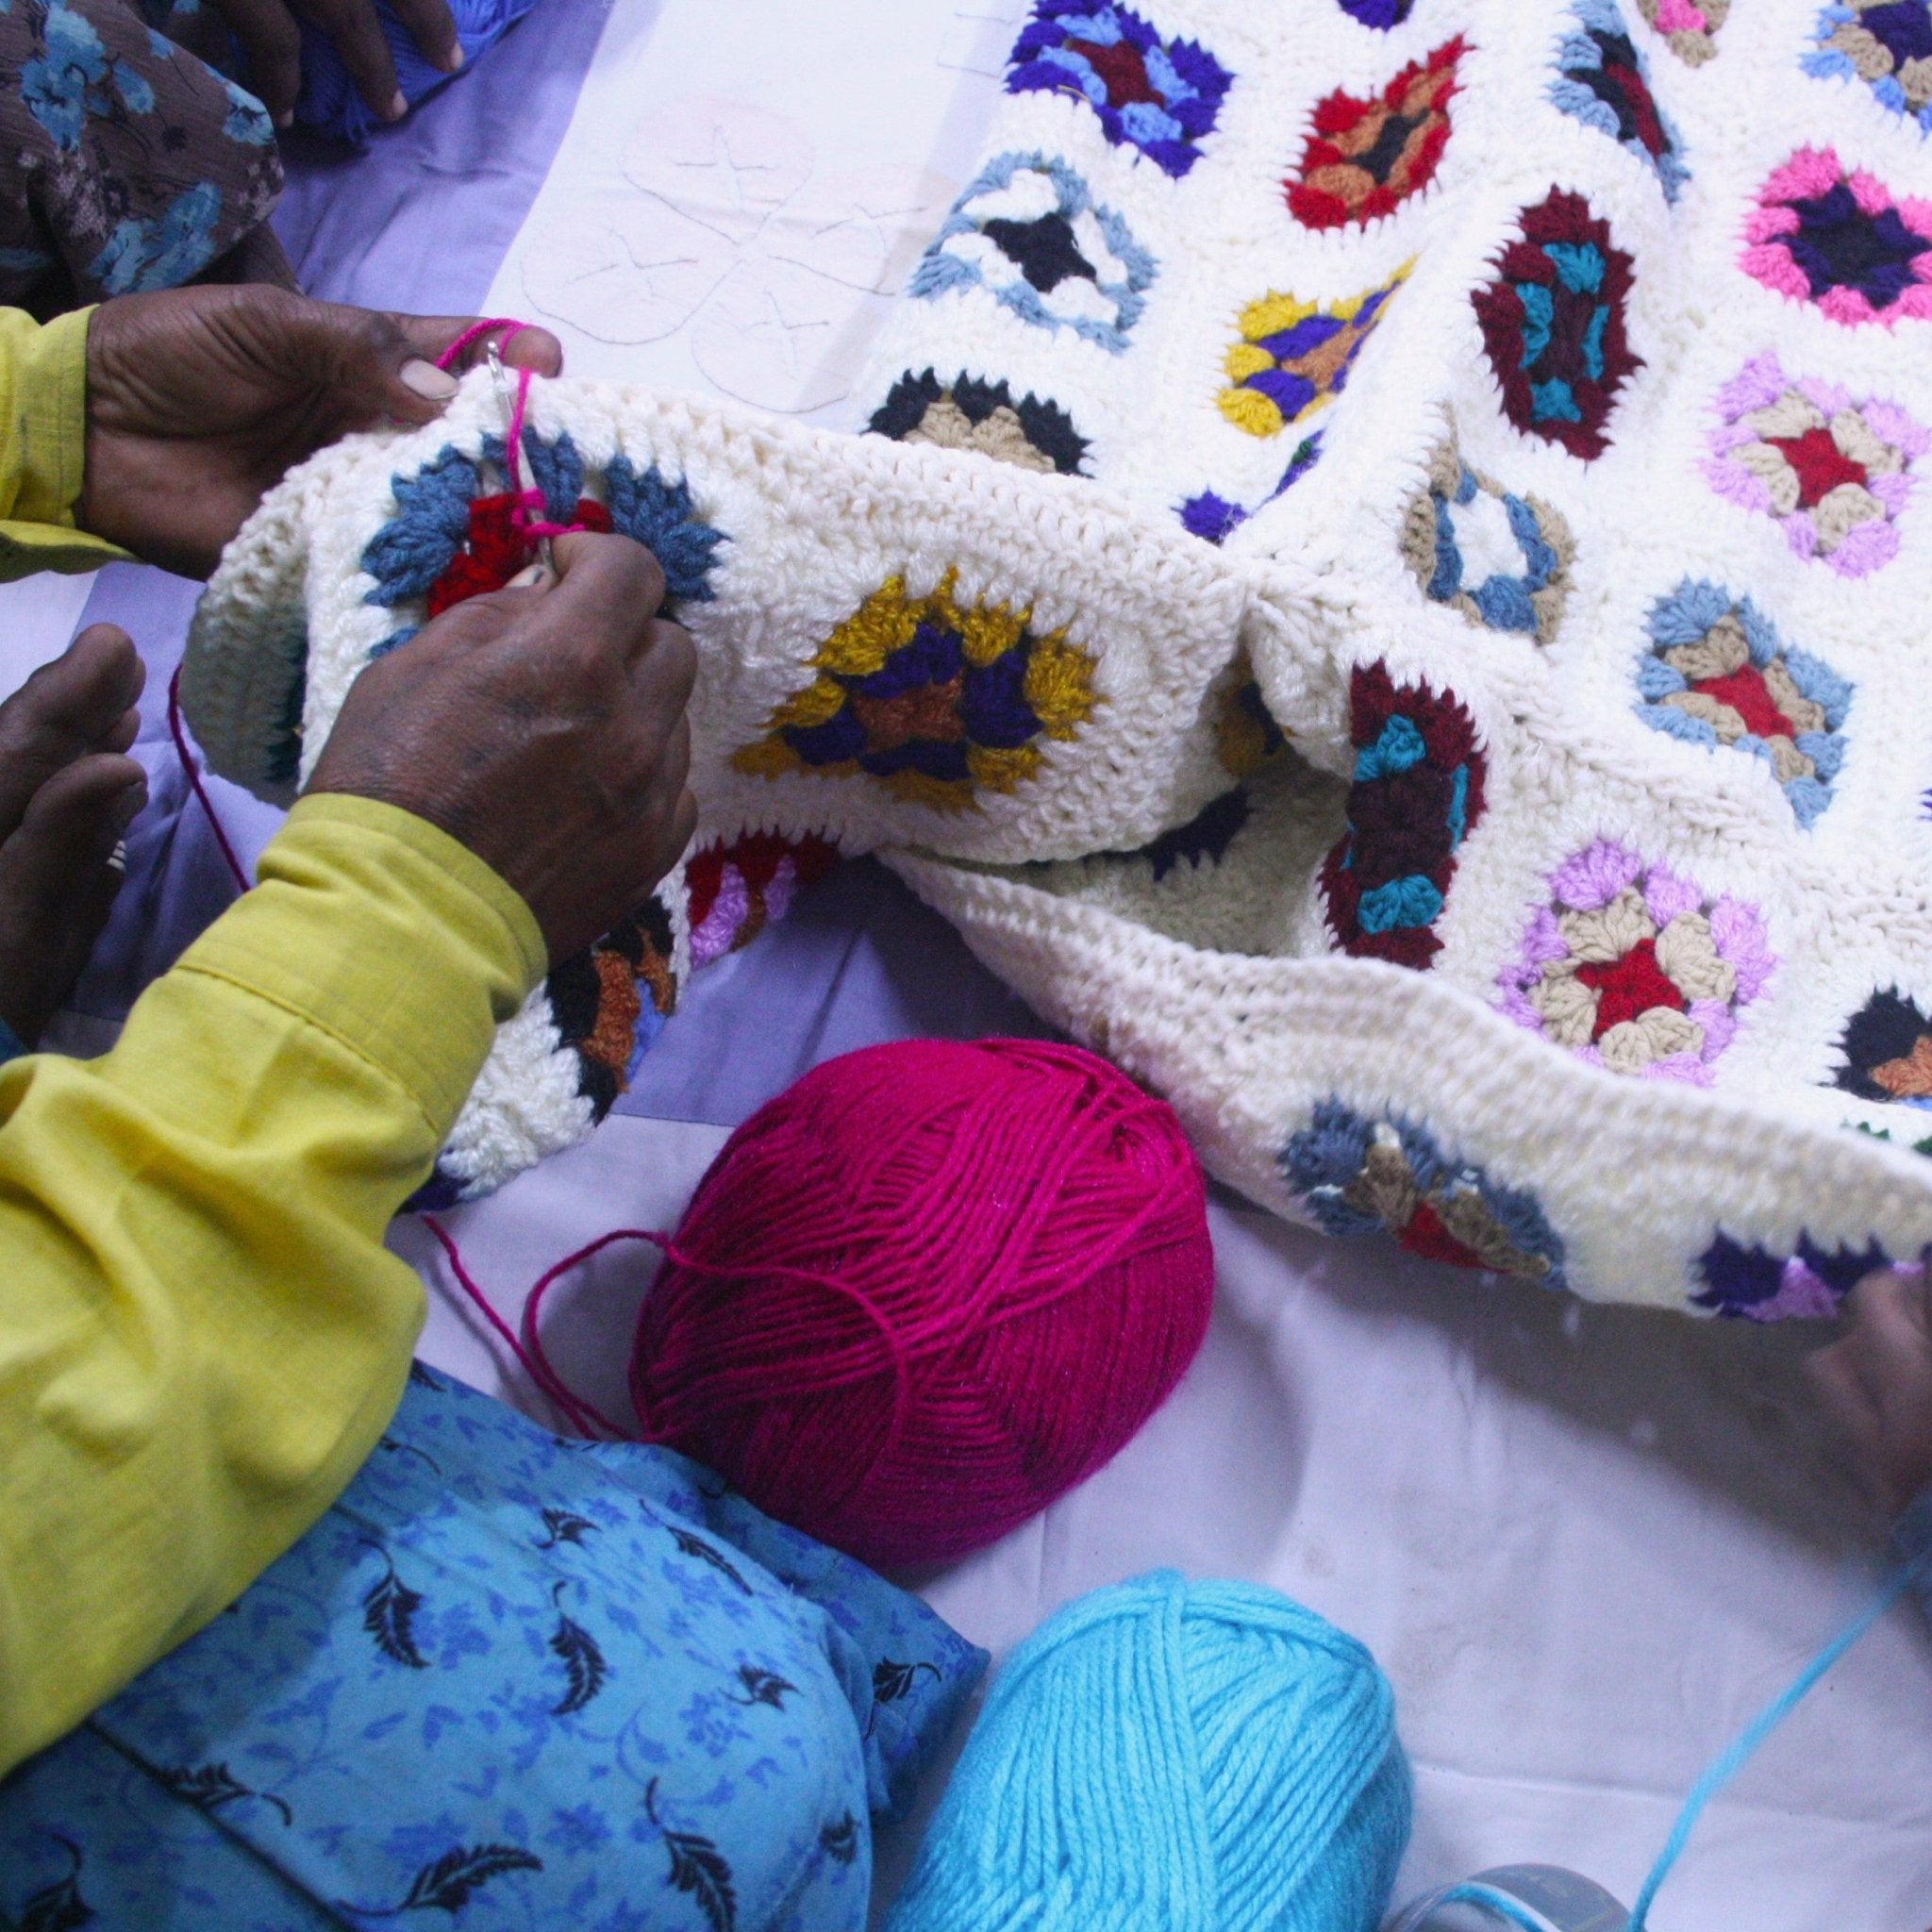 How to crochet a basic granny square - Knit & Crochet Blog